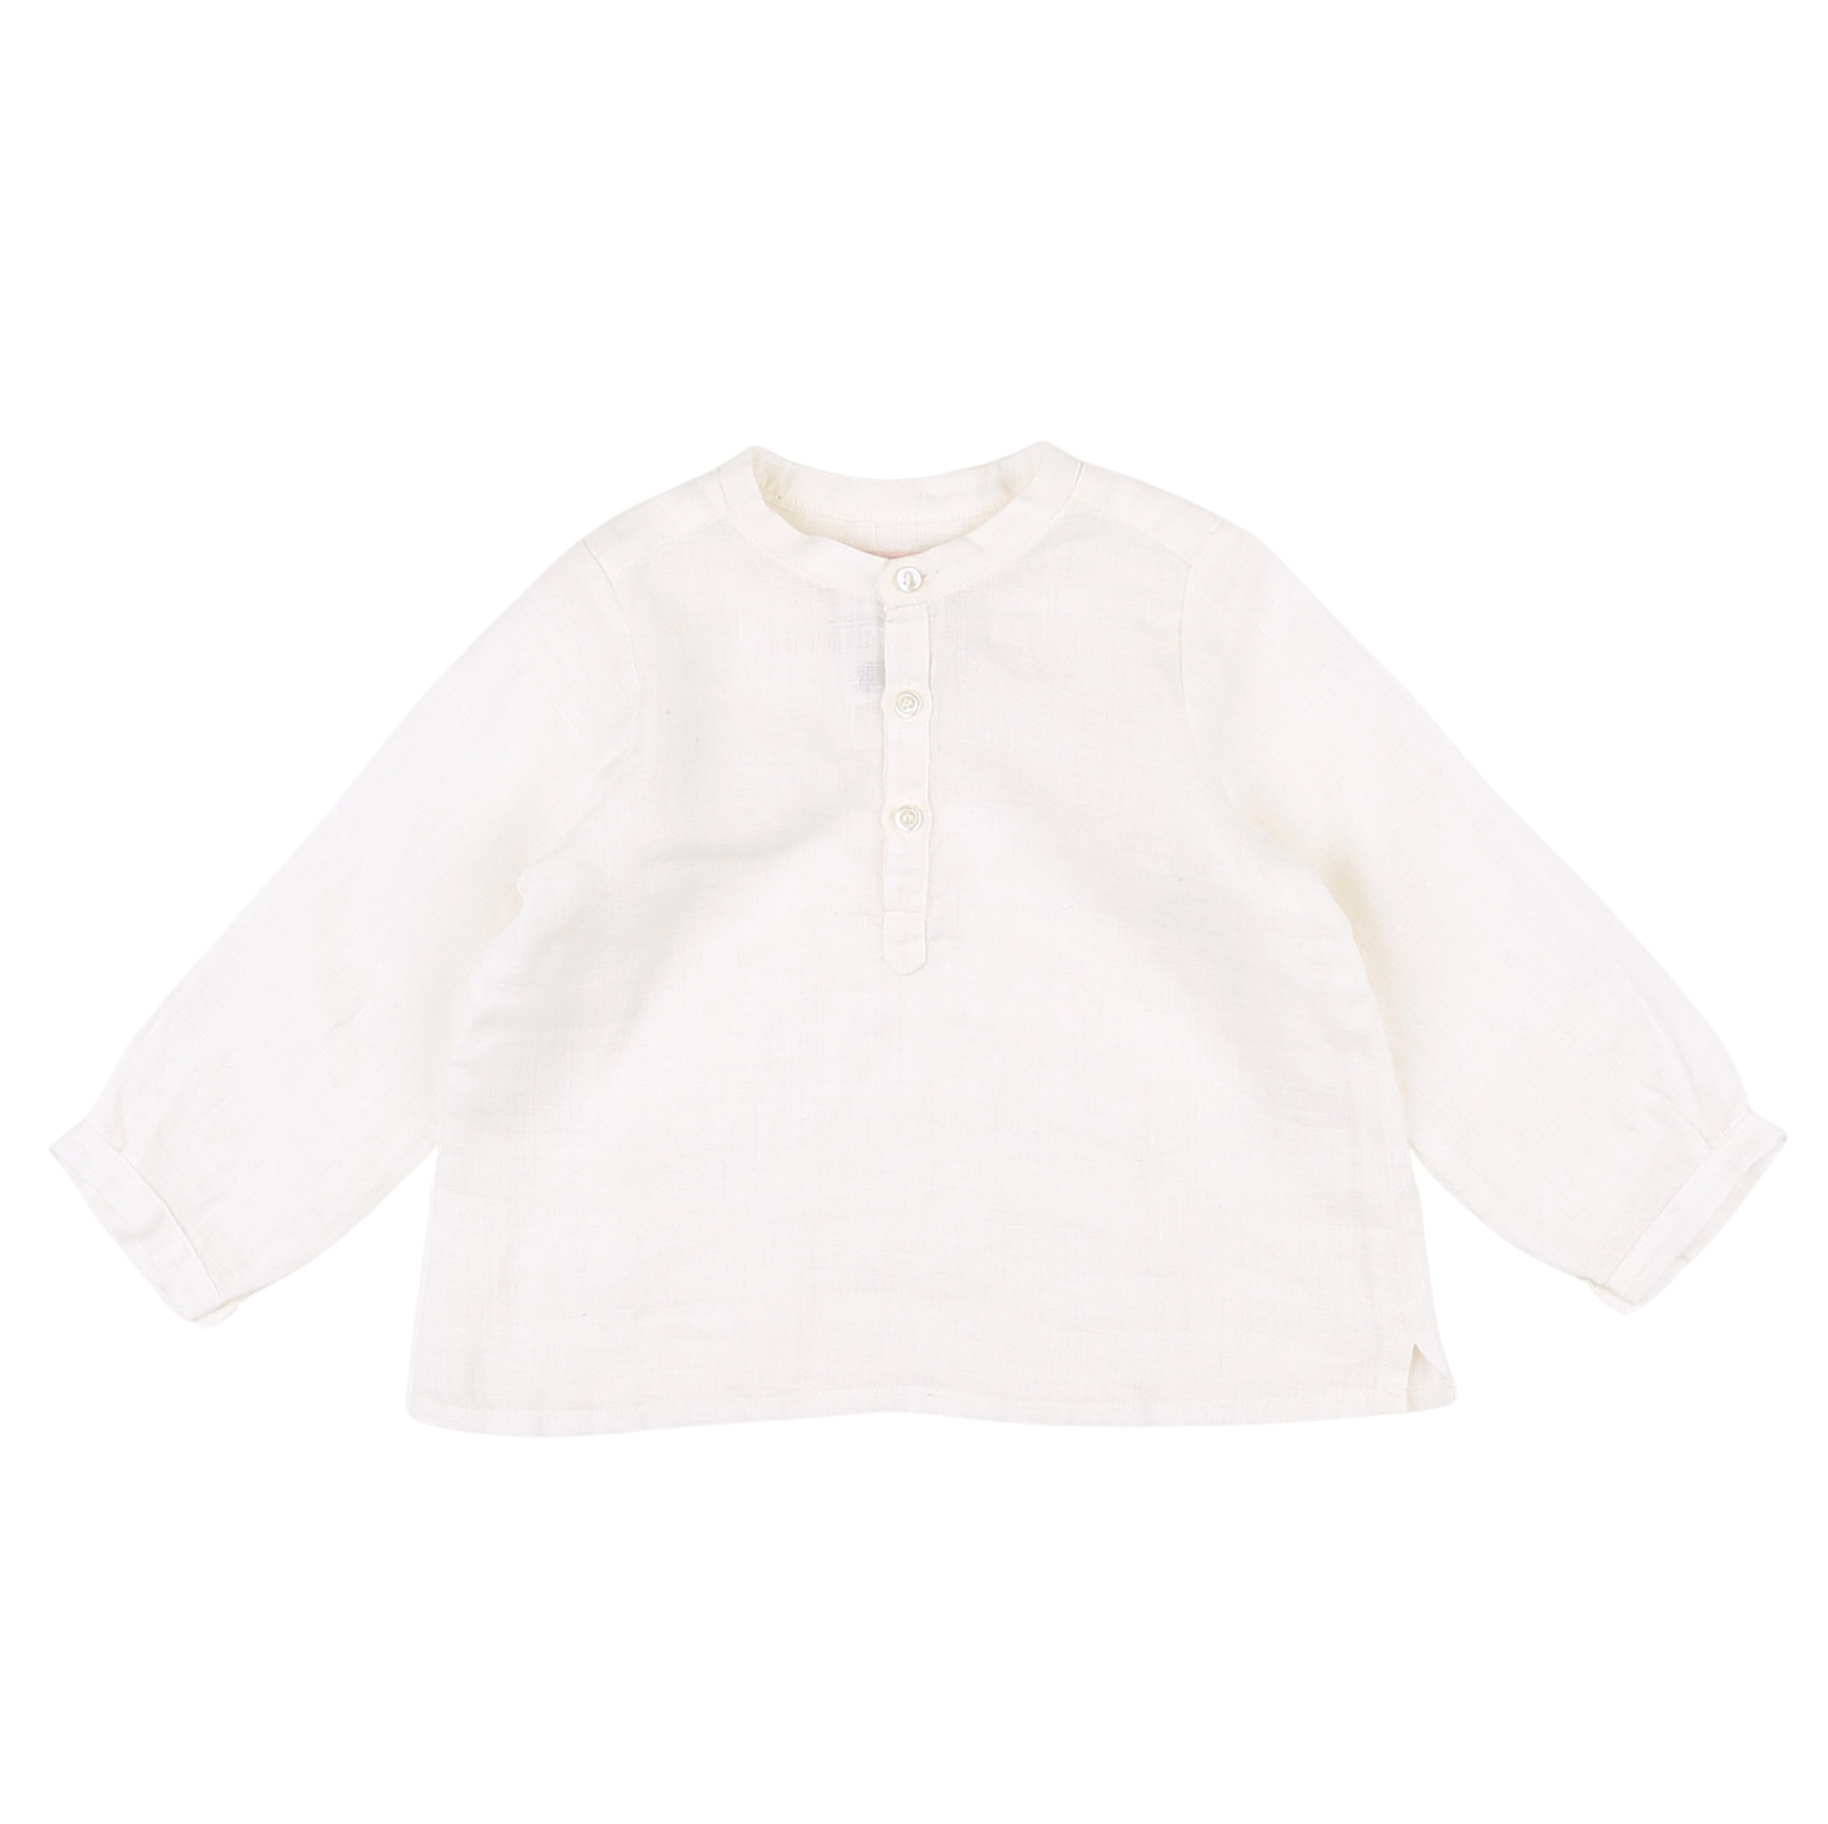 BONPOINT - Linen shirt - 1 year old